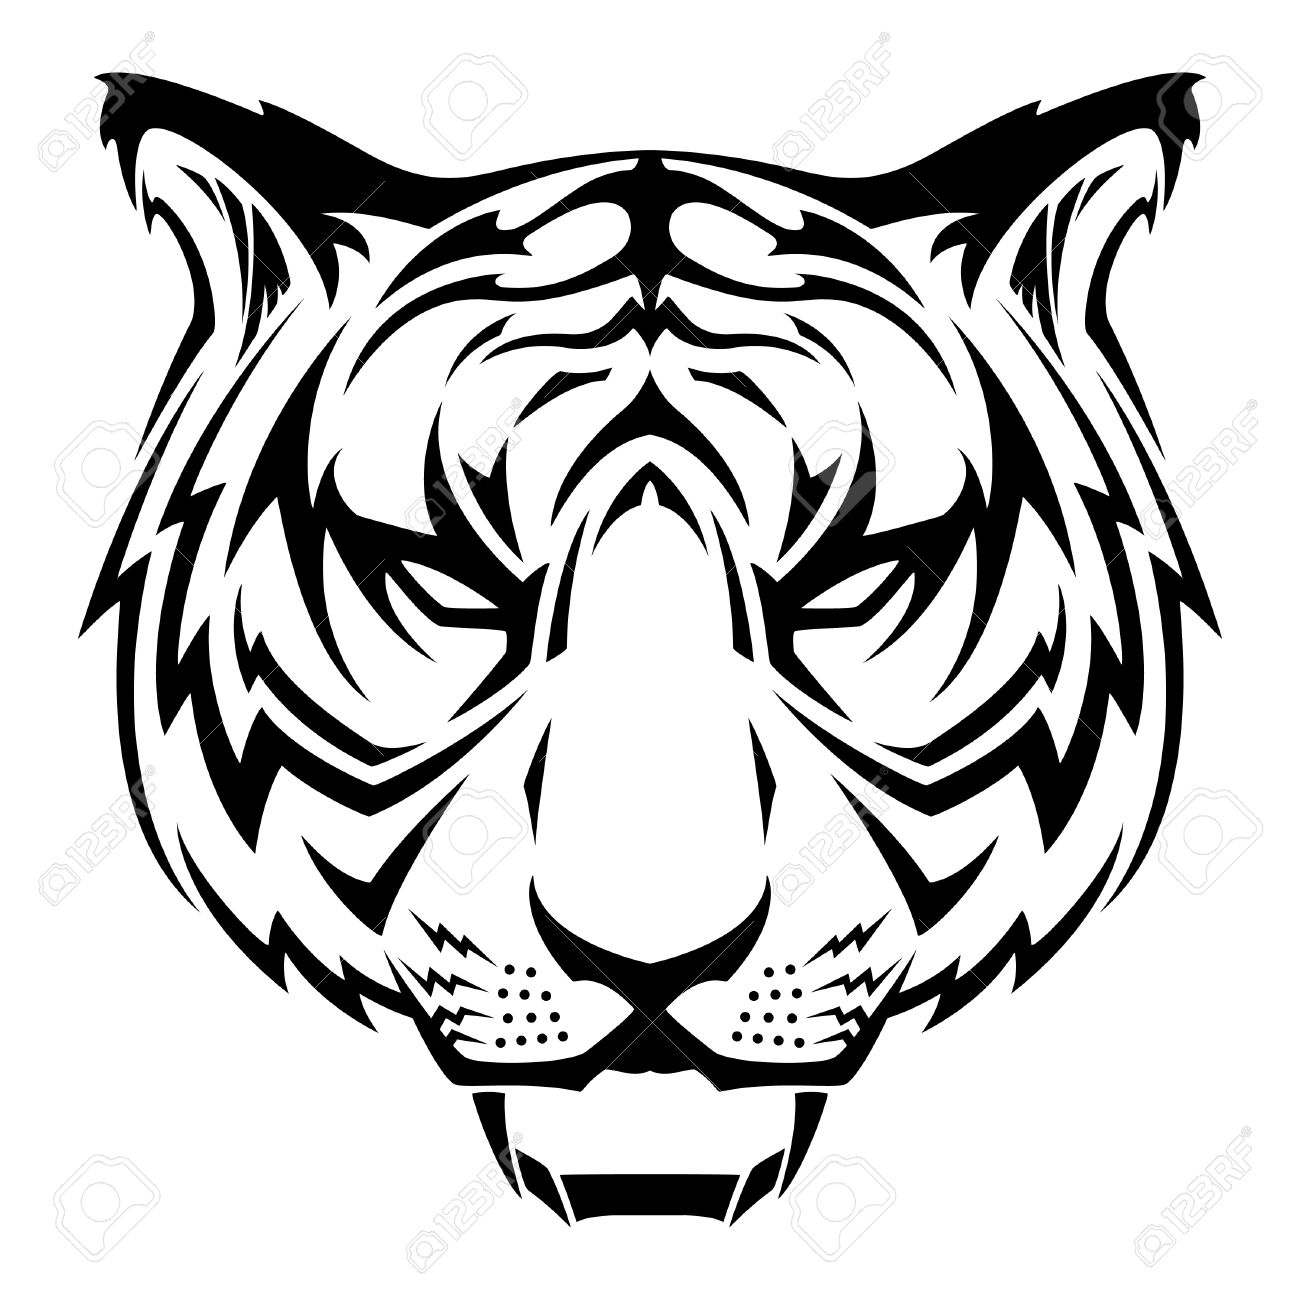 Tiger Tattoo Drawing at GetDrawings | Free download